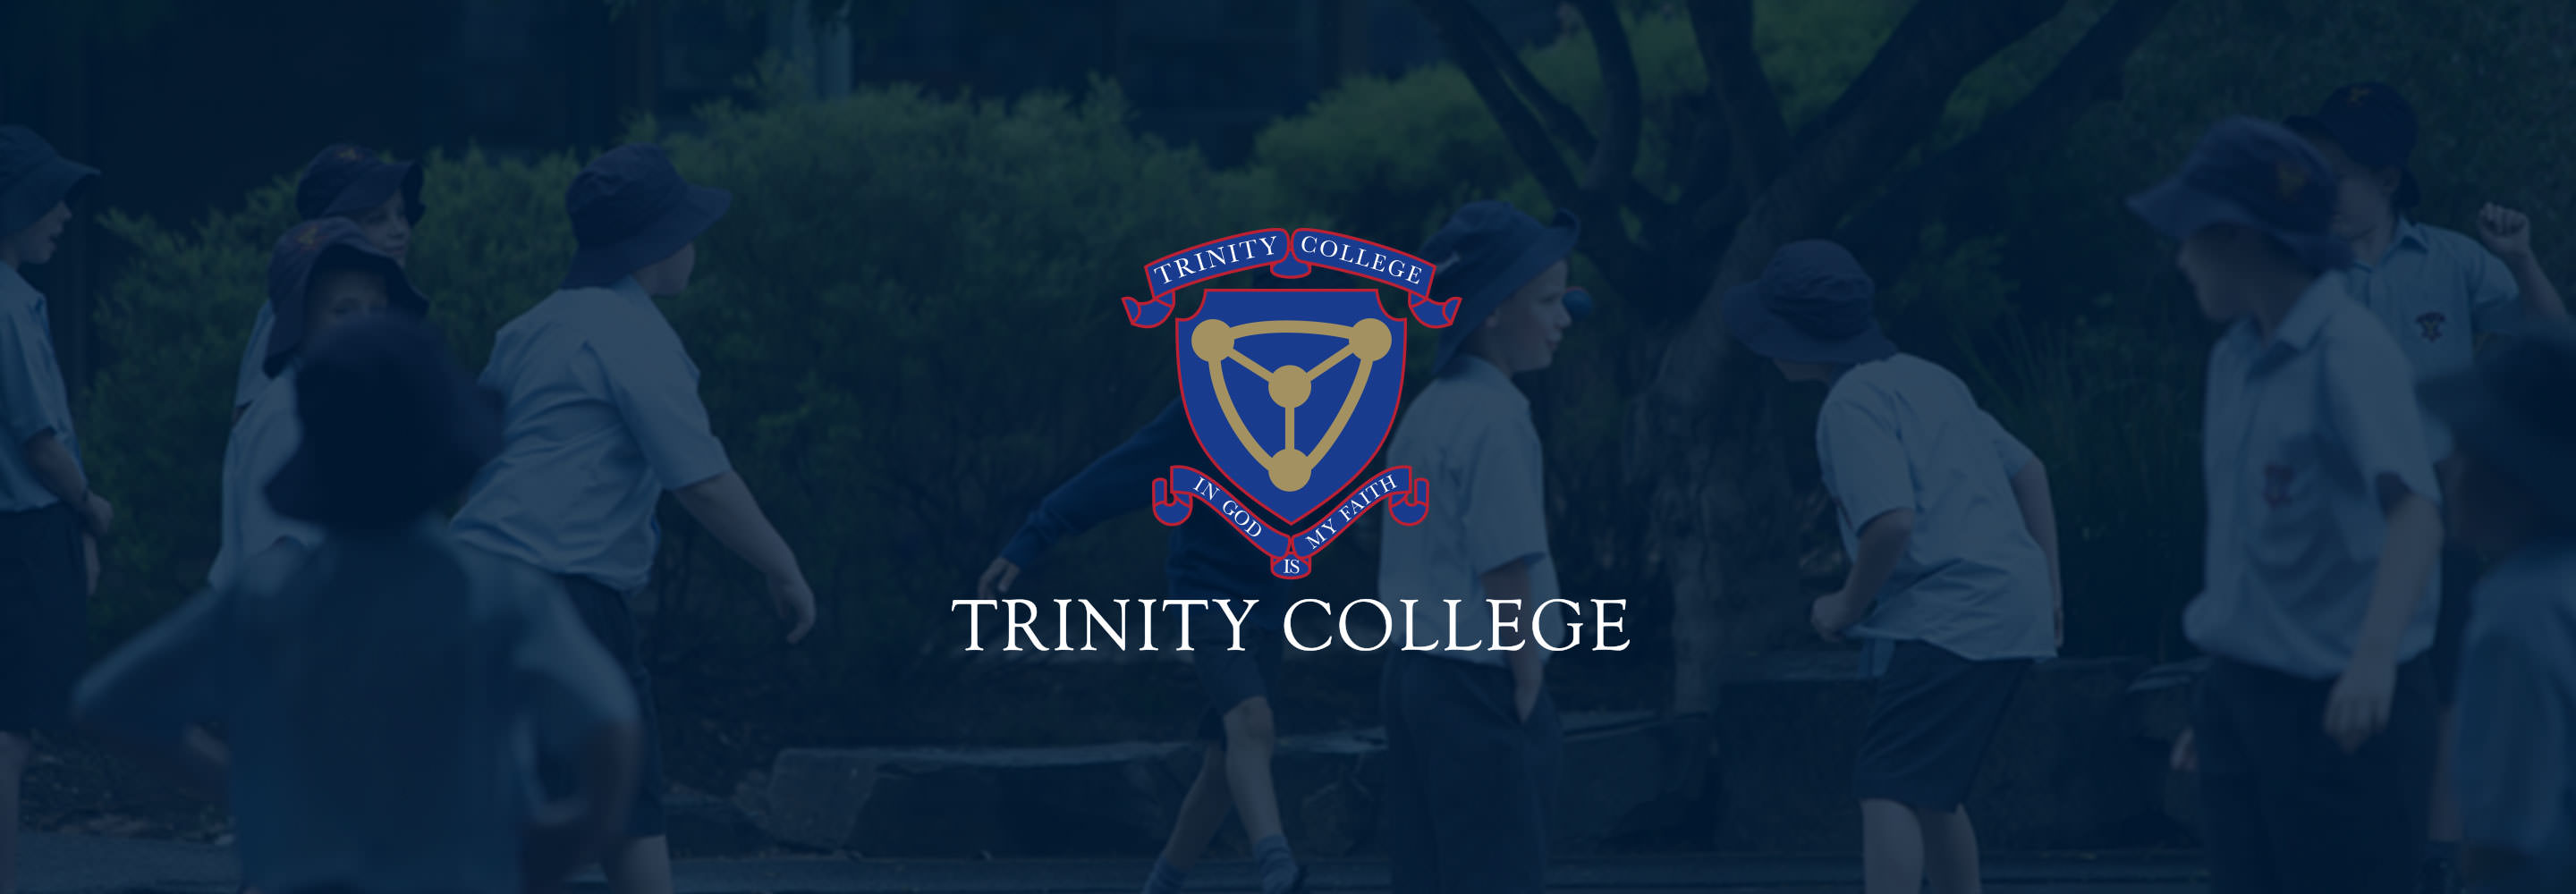 Trinity College logo banner.